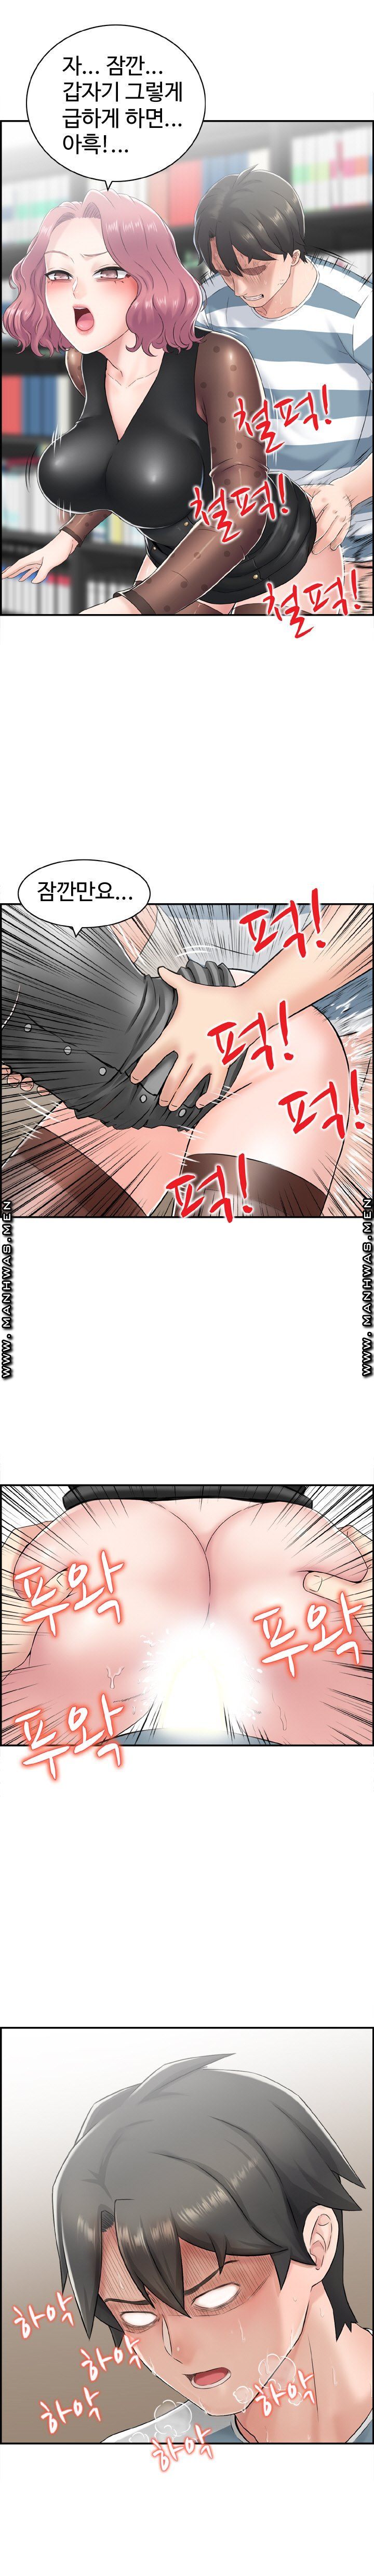 Japan Sensei Raw - Chapter 8 Page 13